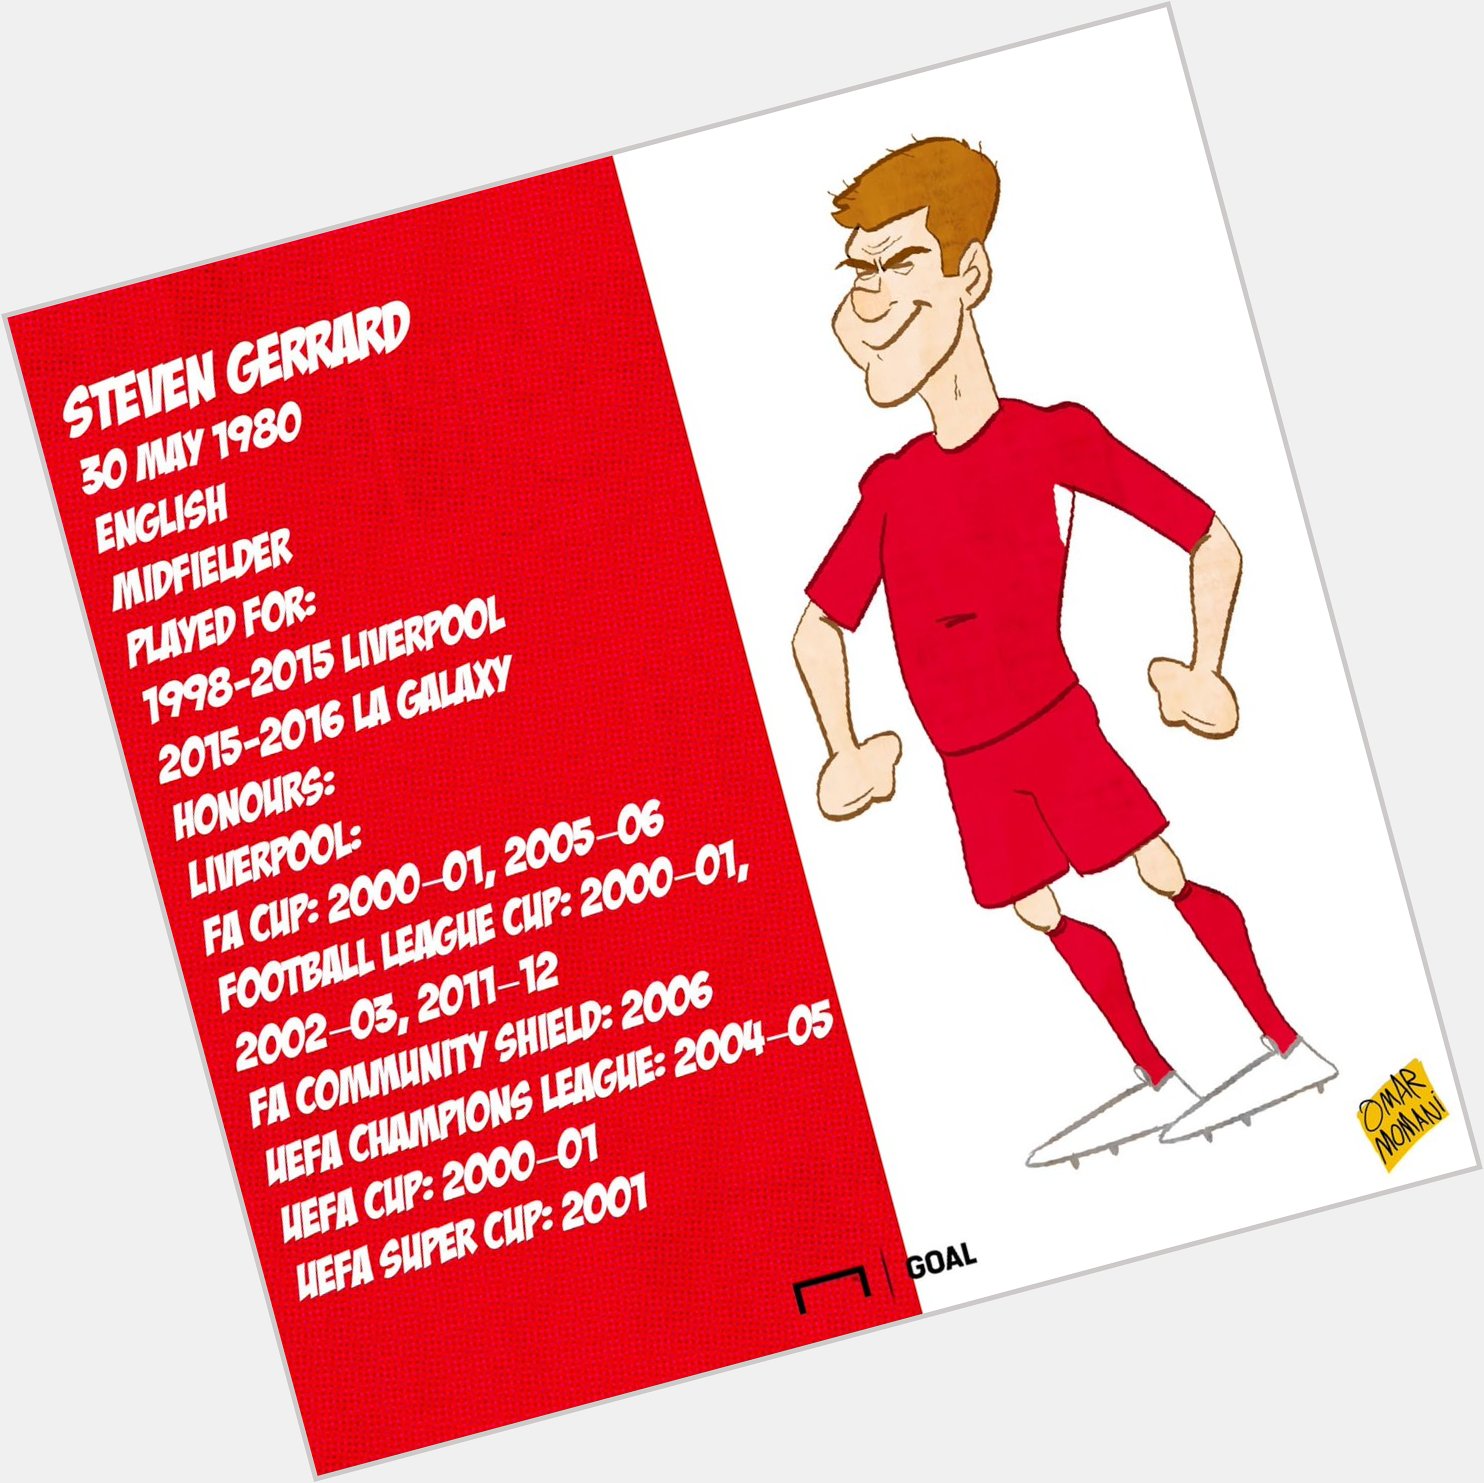 Happy birthday Steven Gerrard                        